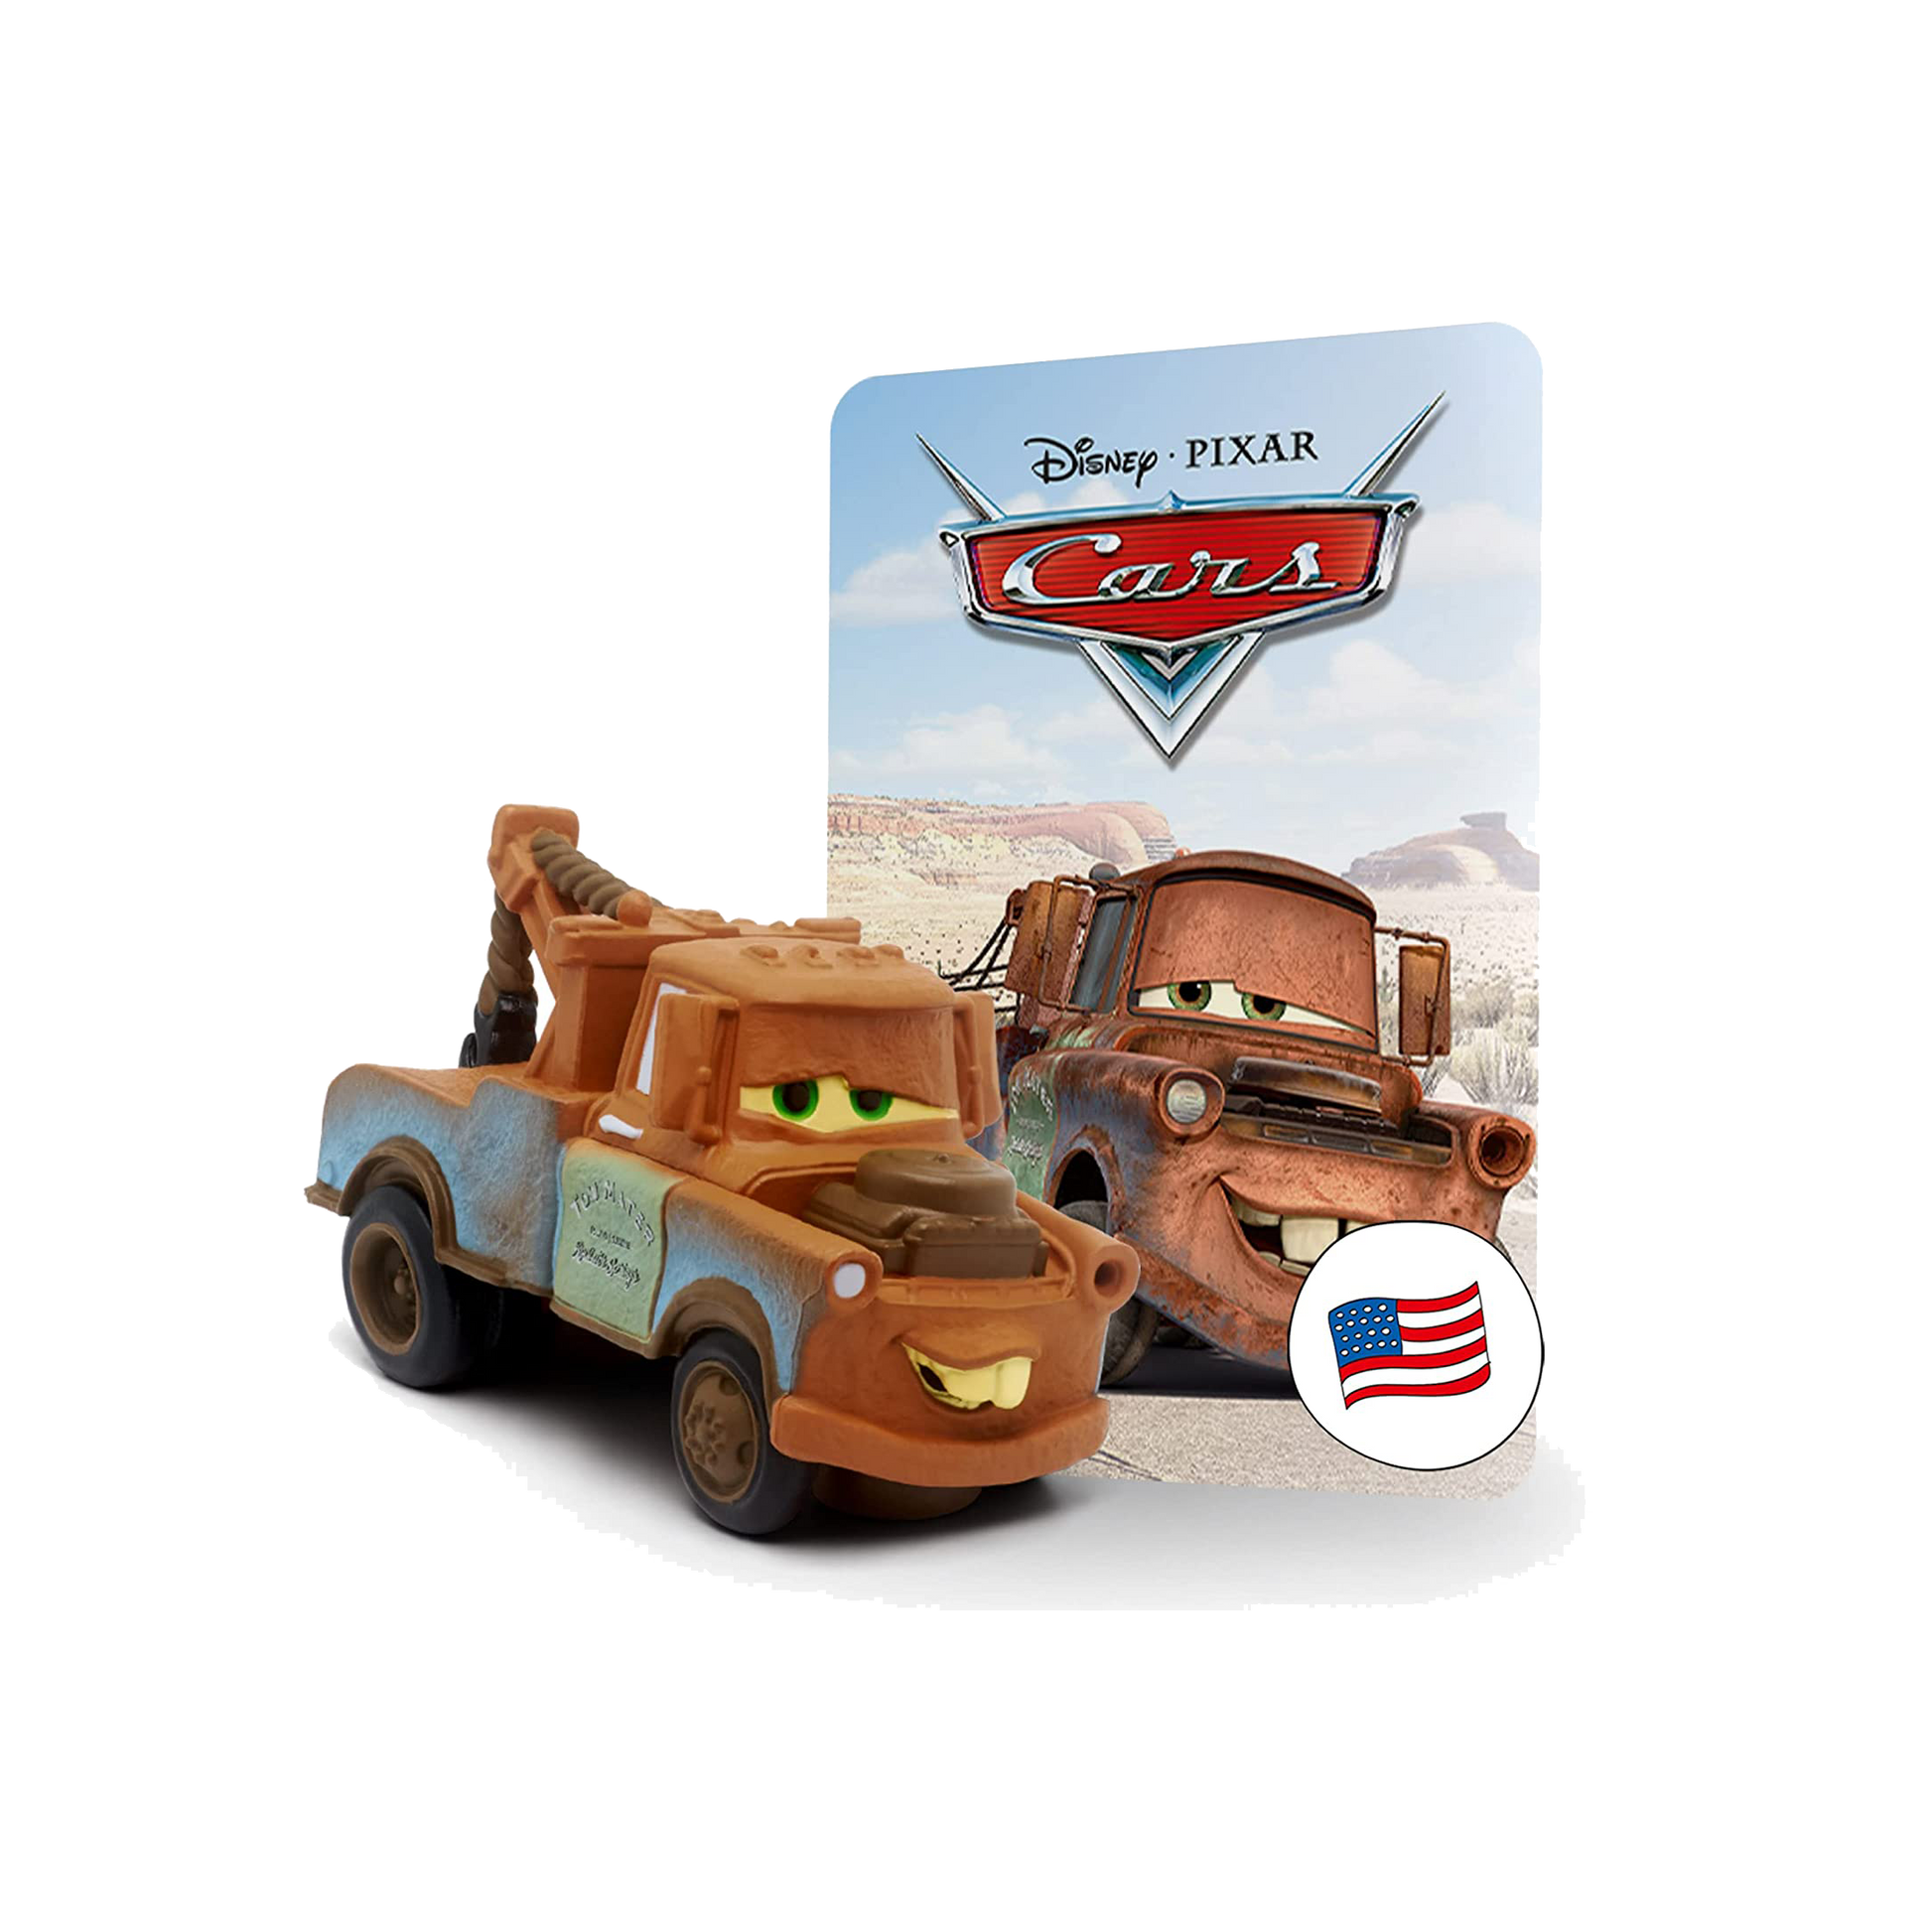 Tonies Disney's Pixar's Cars Audio Play Character